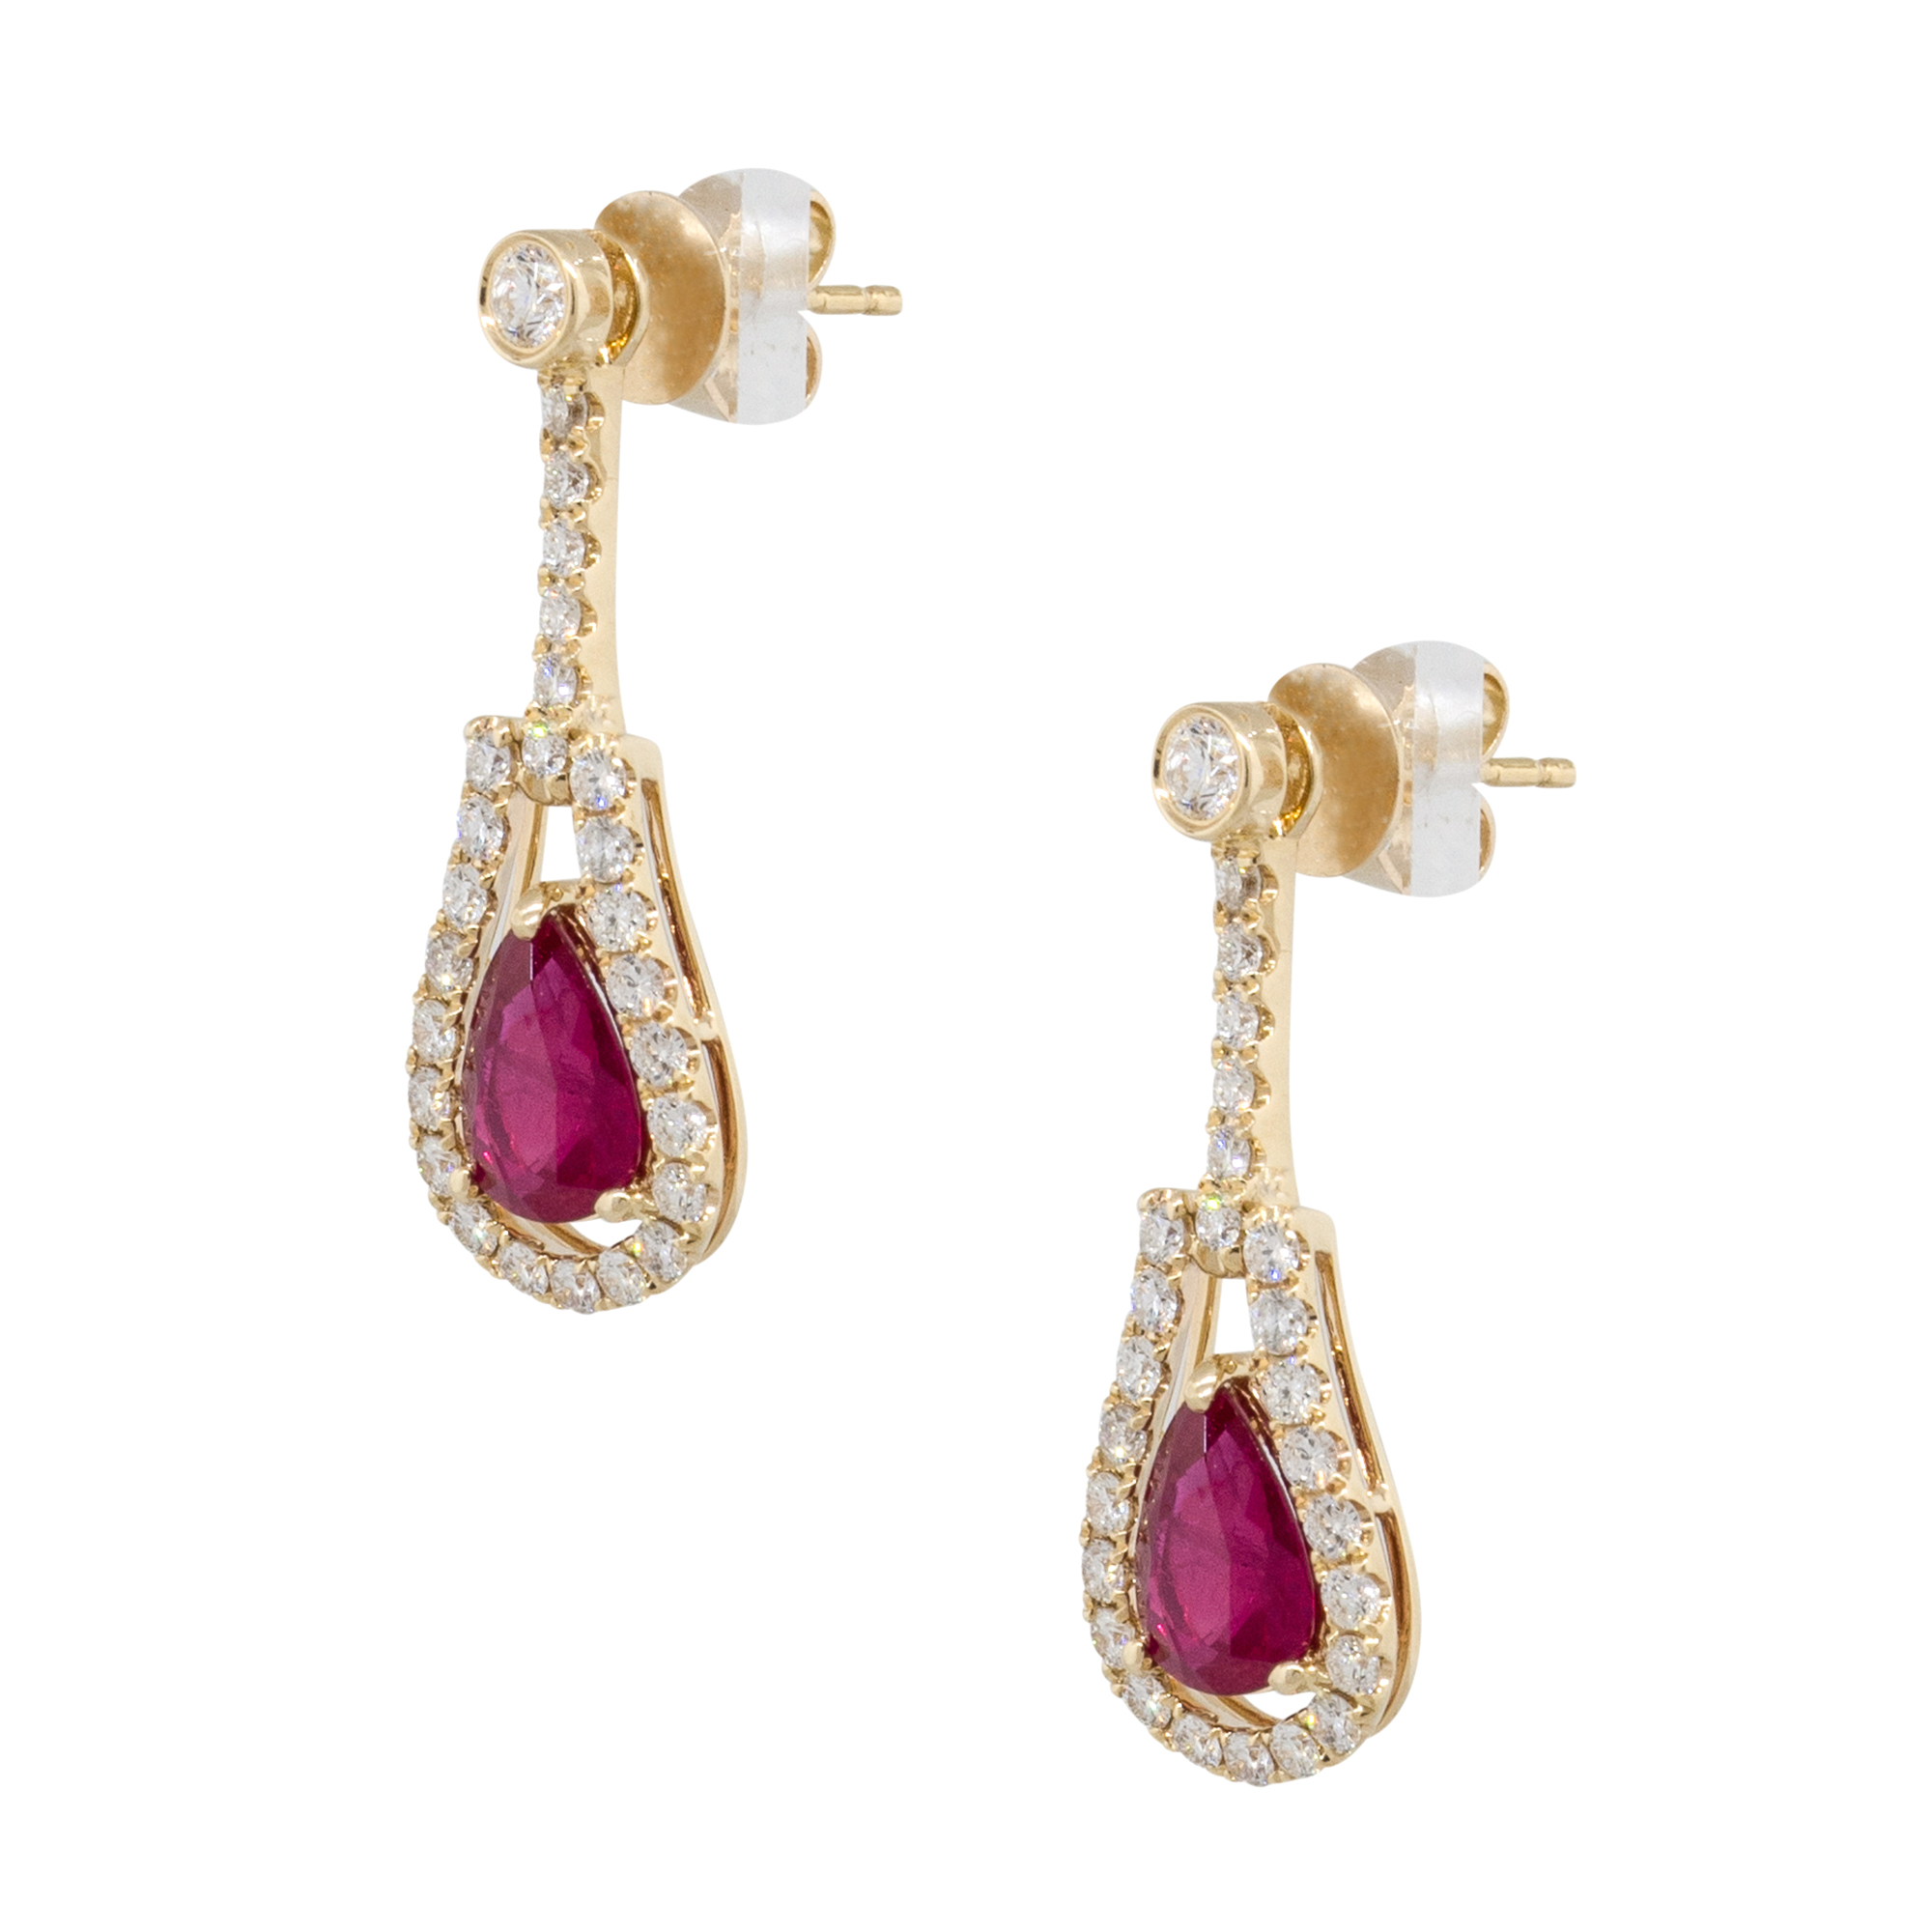 14k Yellow Gold 2.55ct Pear Shape Ruby Dangle Earrings With Diamonds